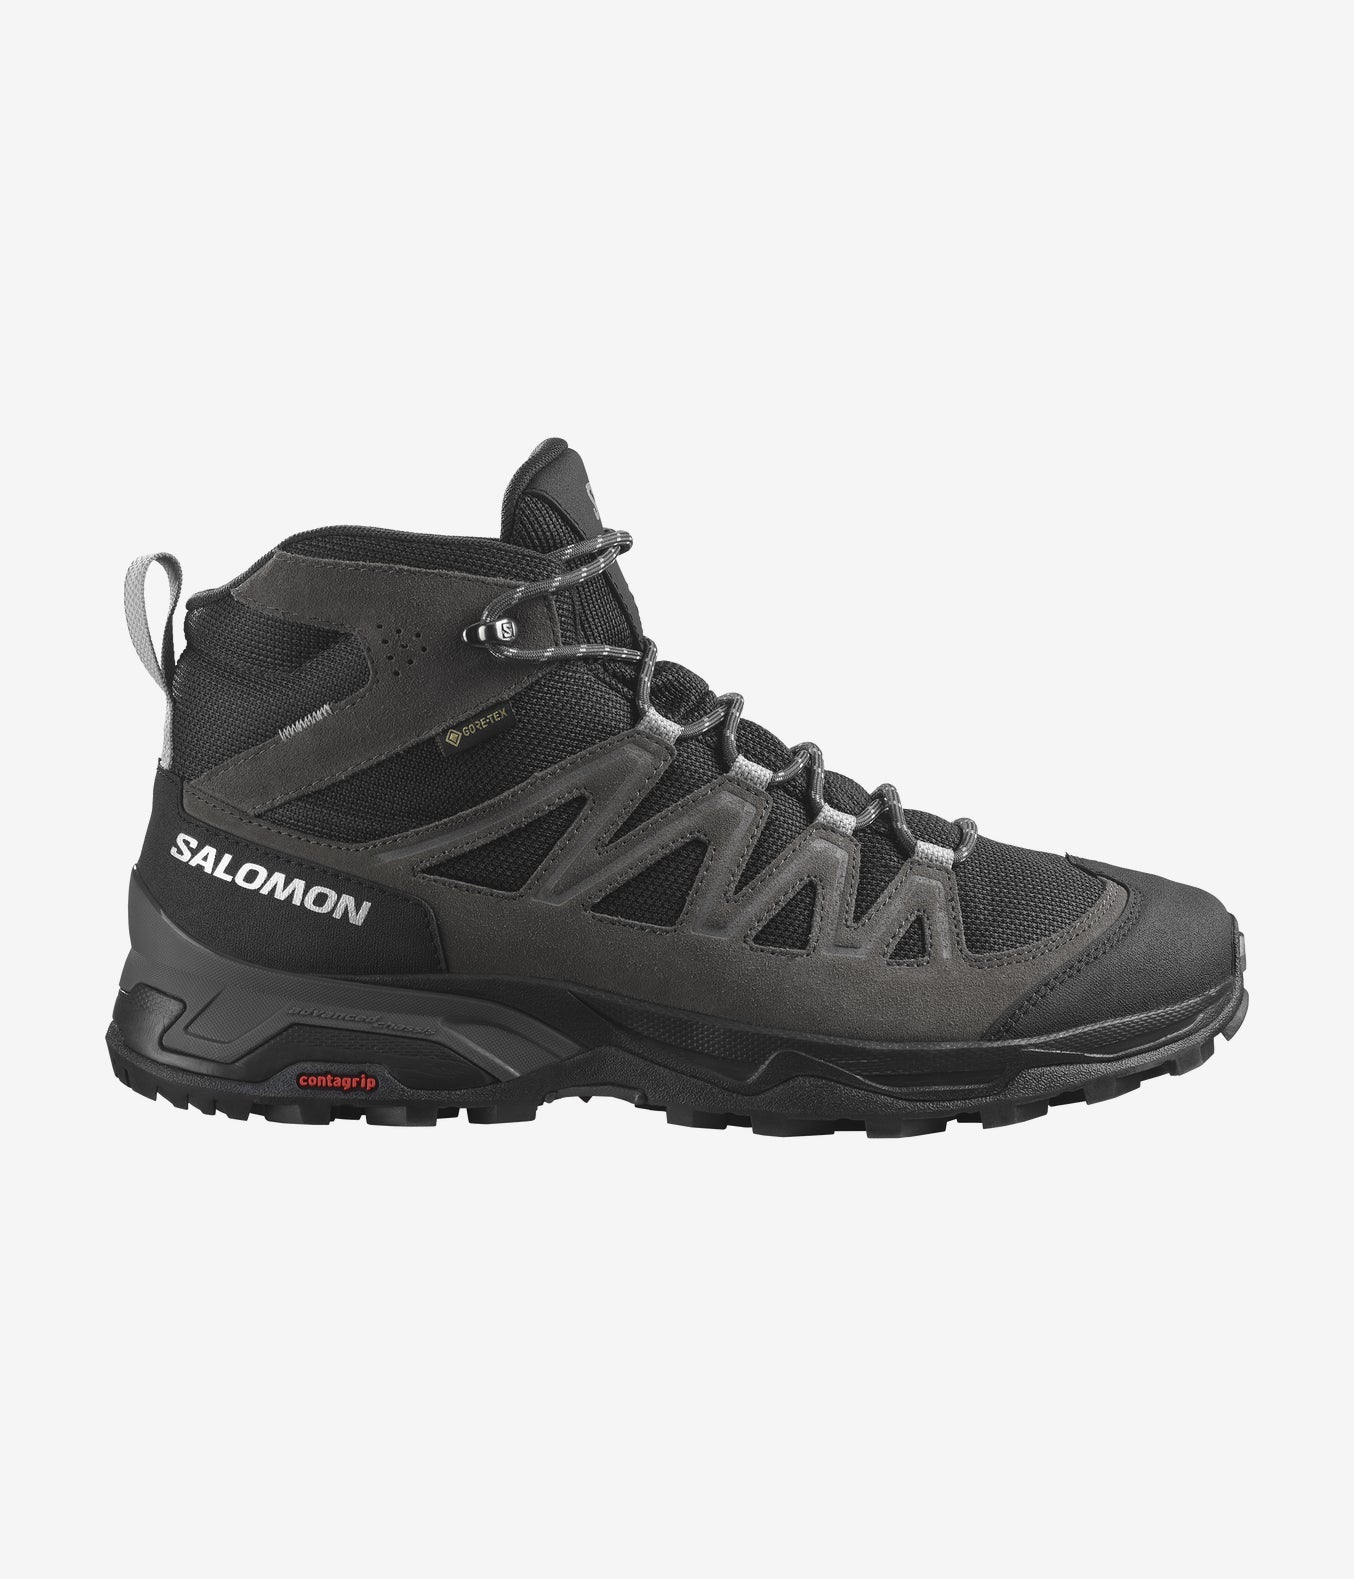 SALOMON, Men's Trekking Shoes, Black